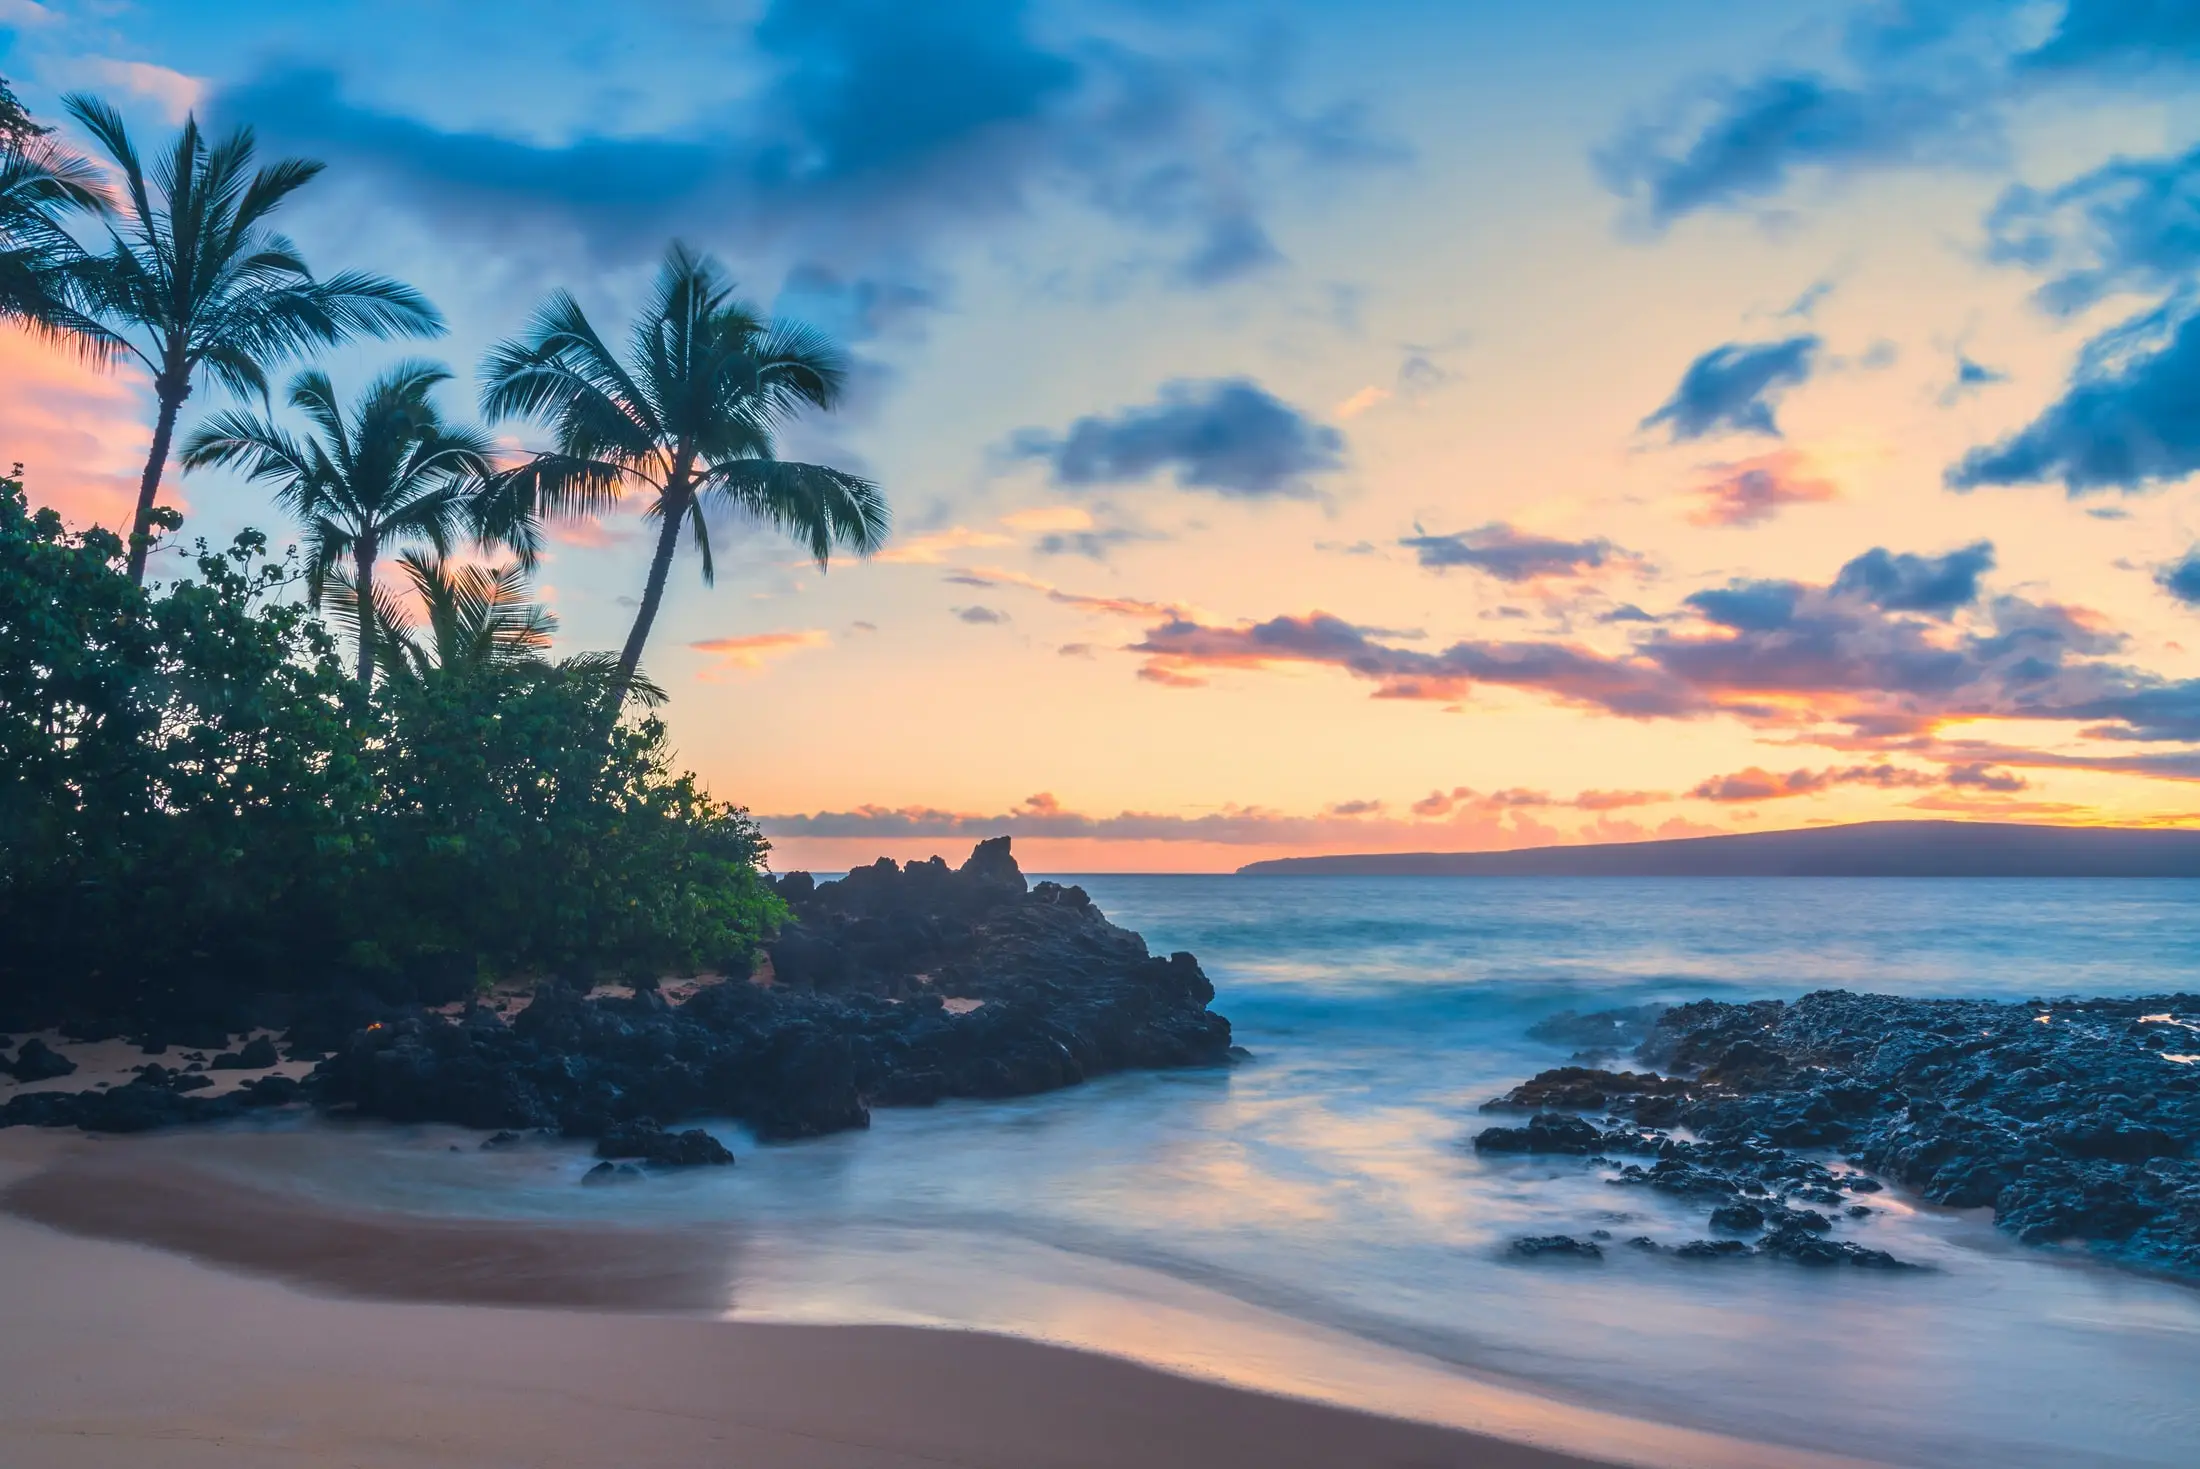 Maui - Destination image